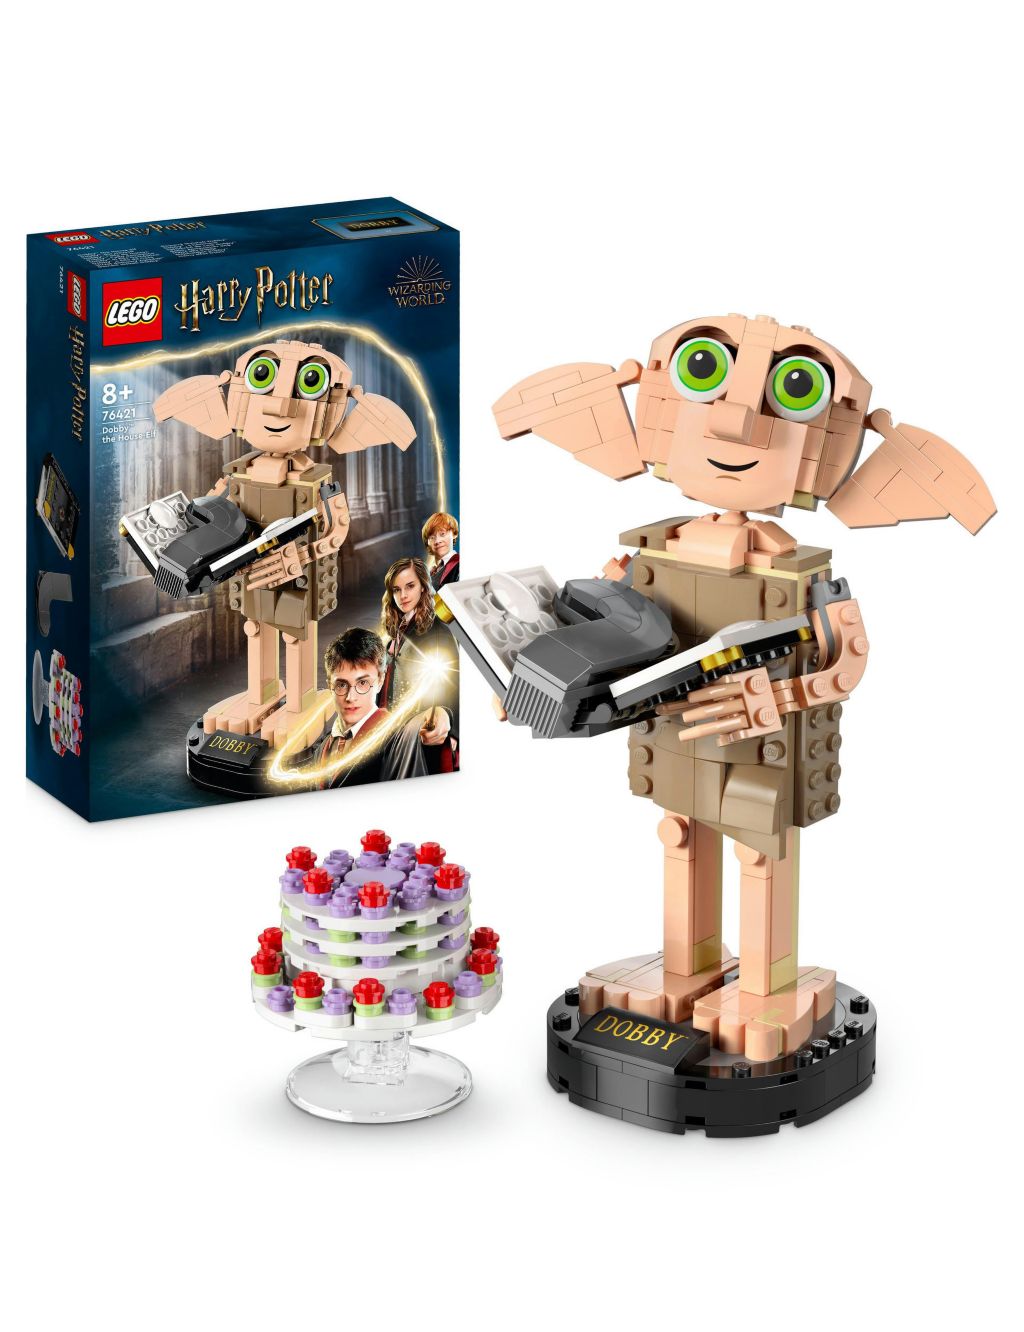 LEGO Harry Potter Dobby the House-Elf Figure (8+ Yrs) image 1